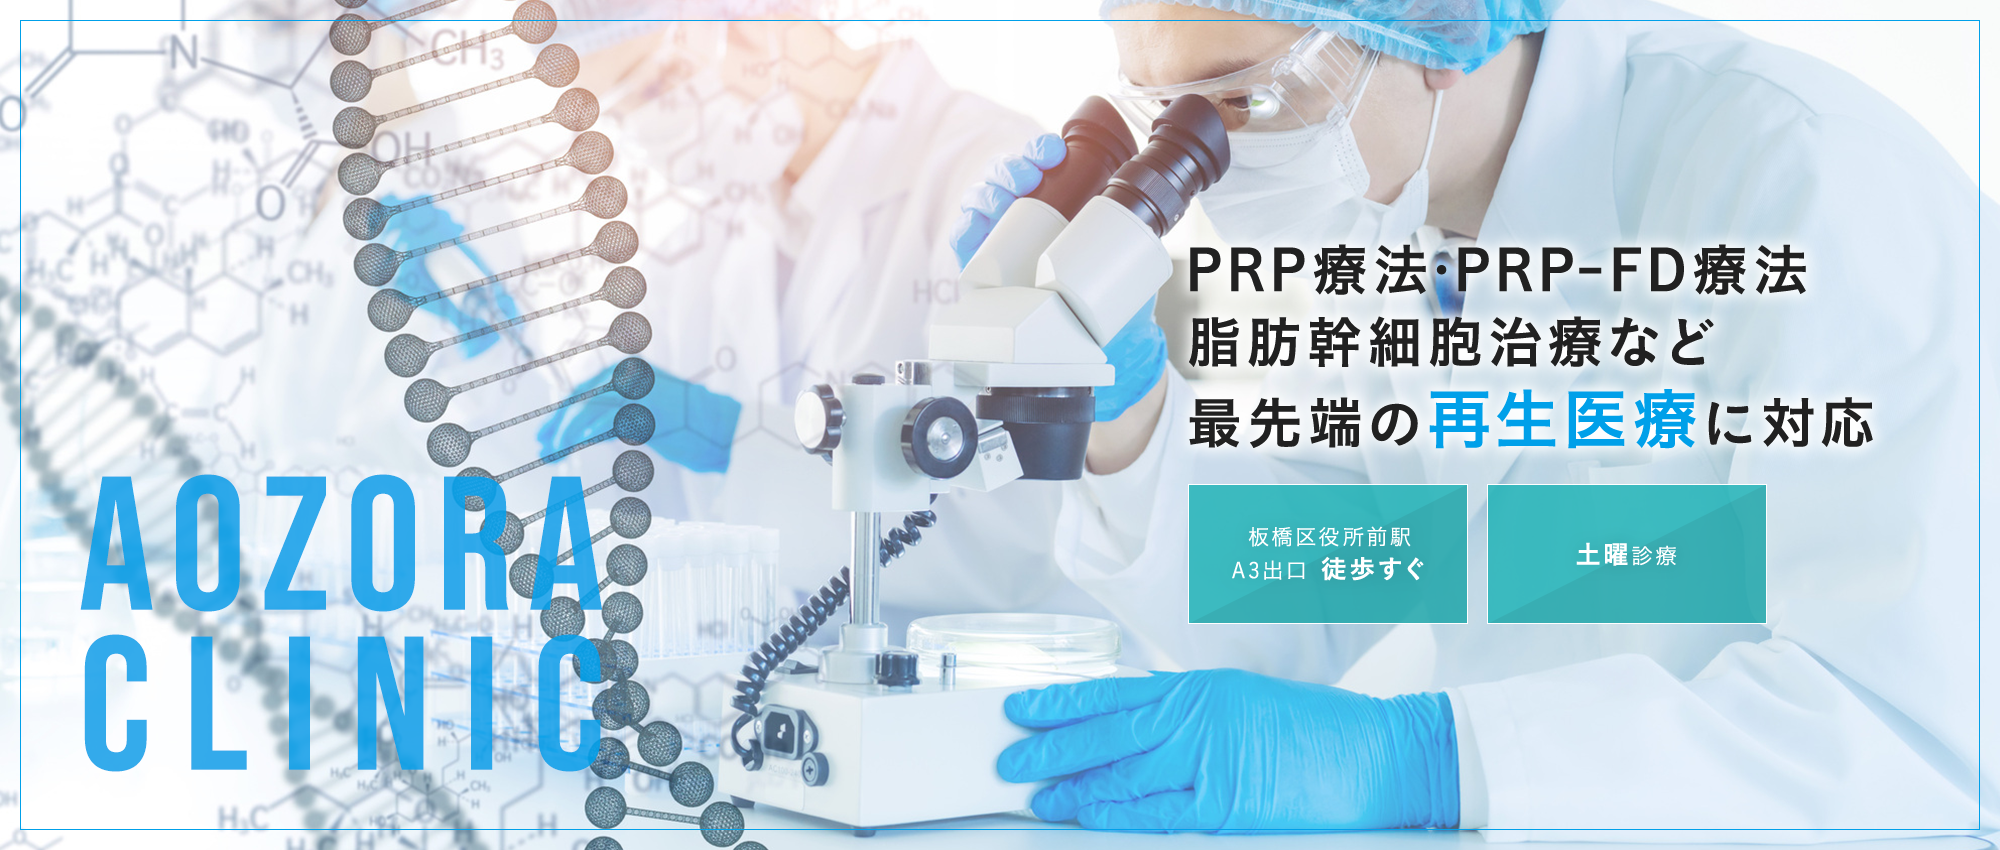 PRP療法・PRP-FD療法 脂肪幹細胞治療など最先端の再生医療に対応